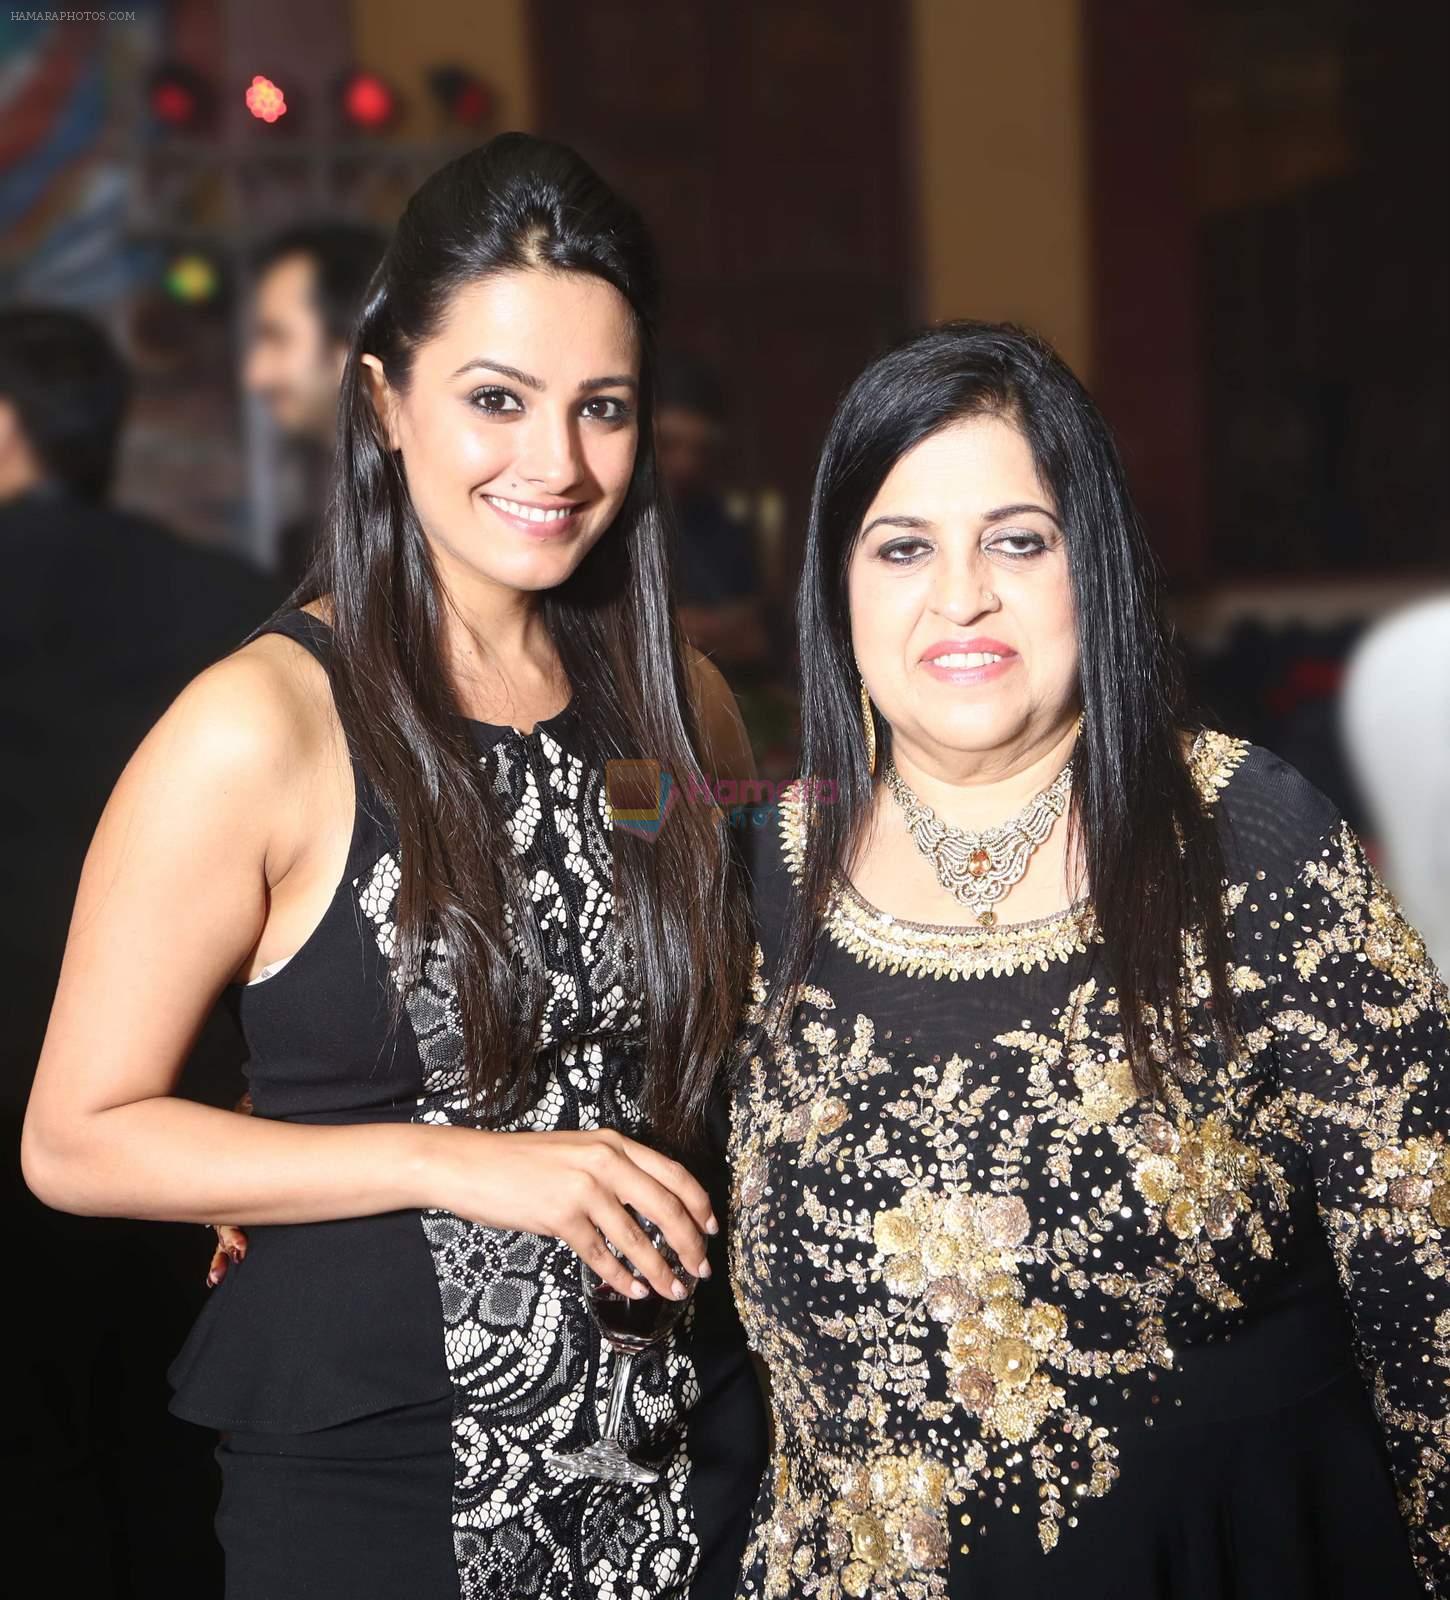 Anita Hassanandani With Anita Israni at Luv Isranis wedding wrap up party